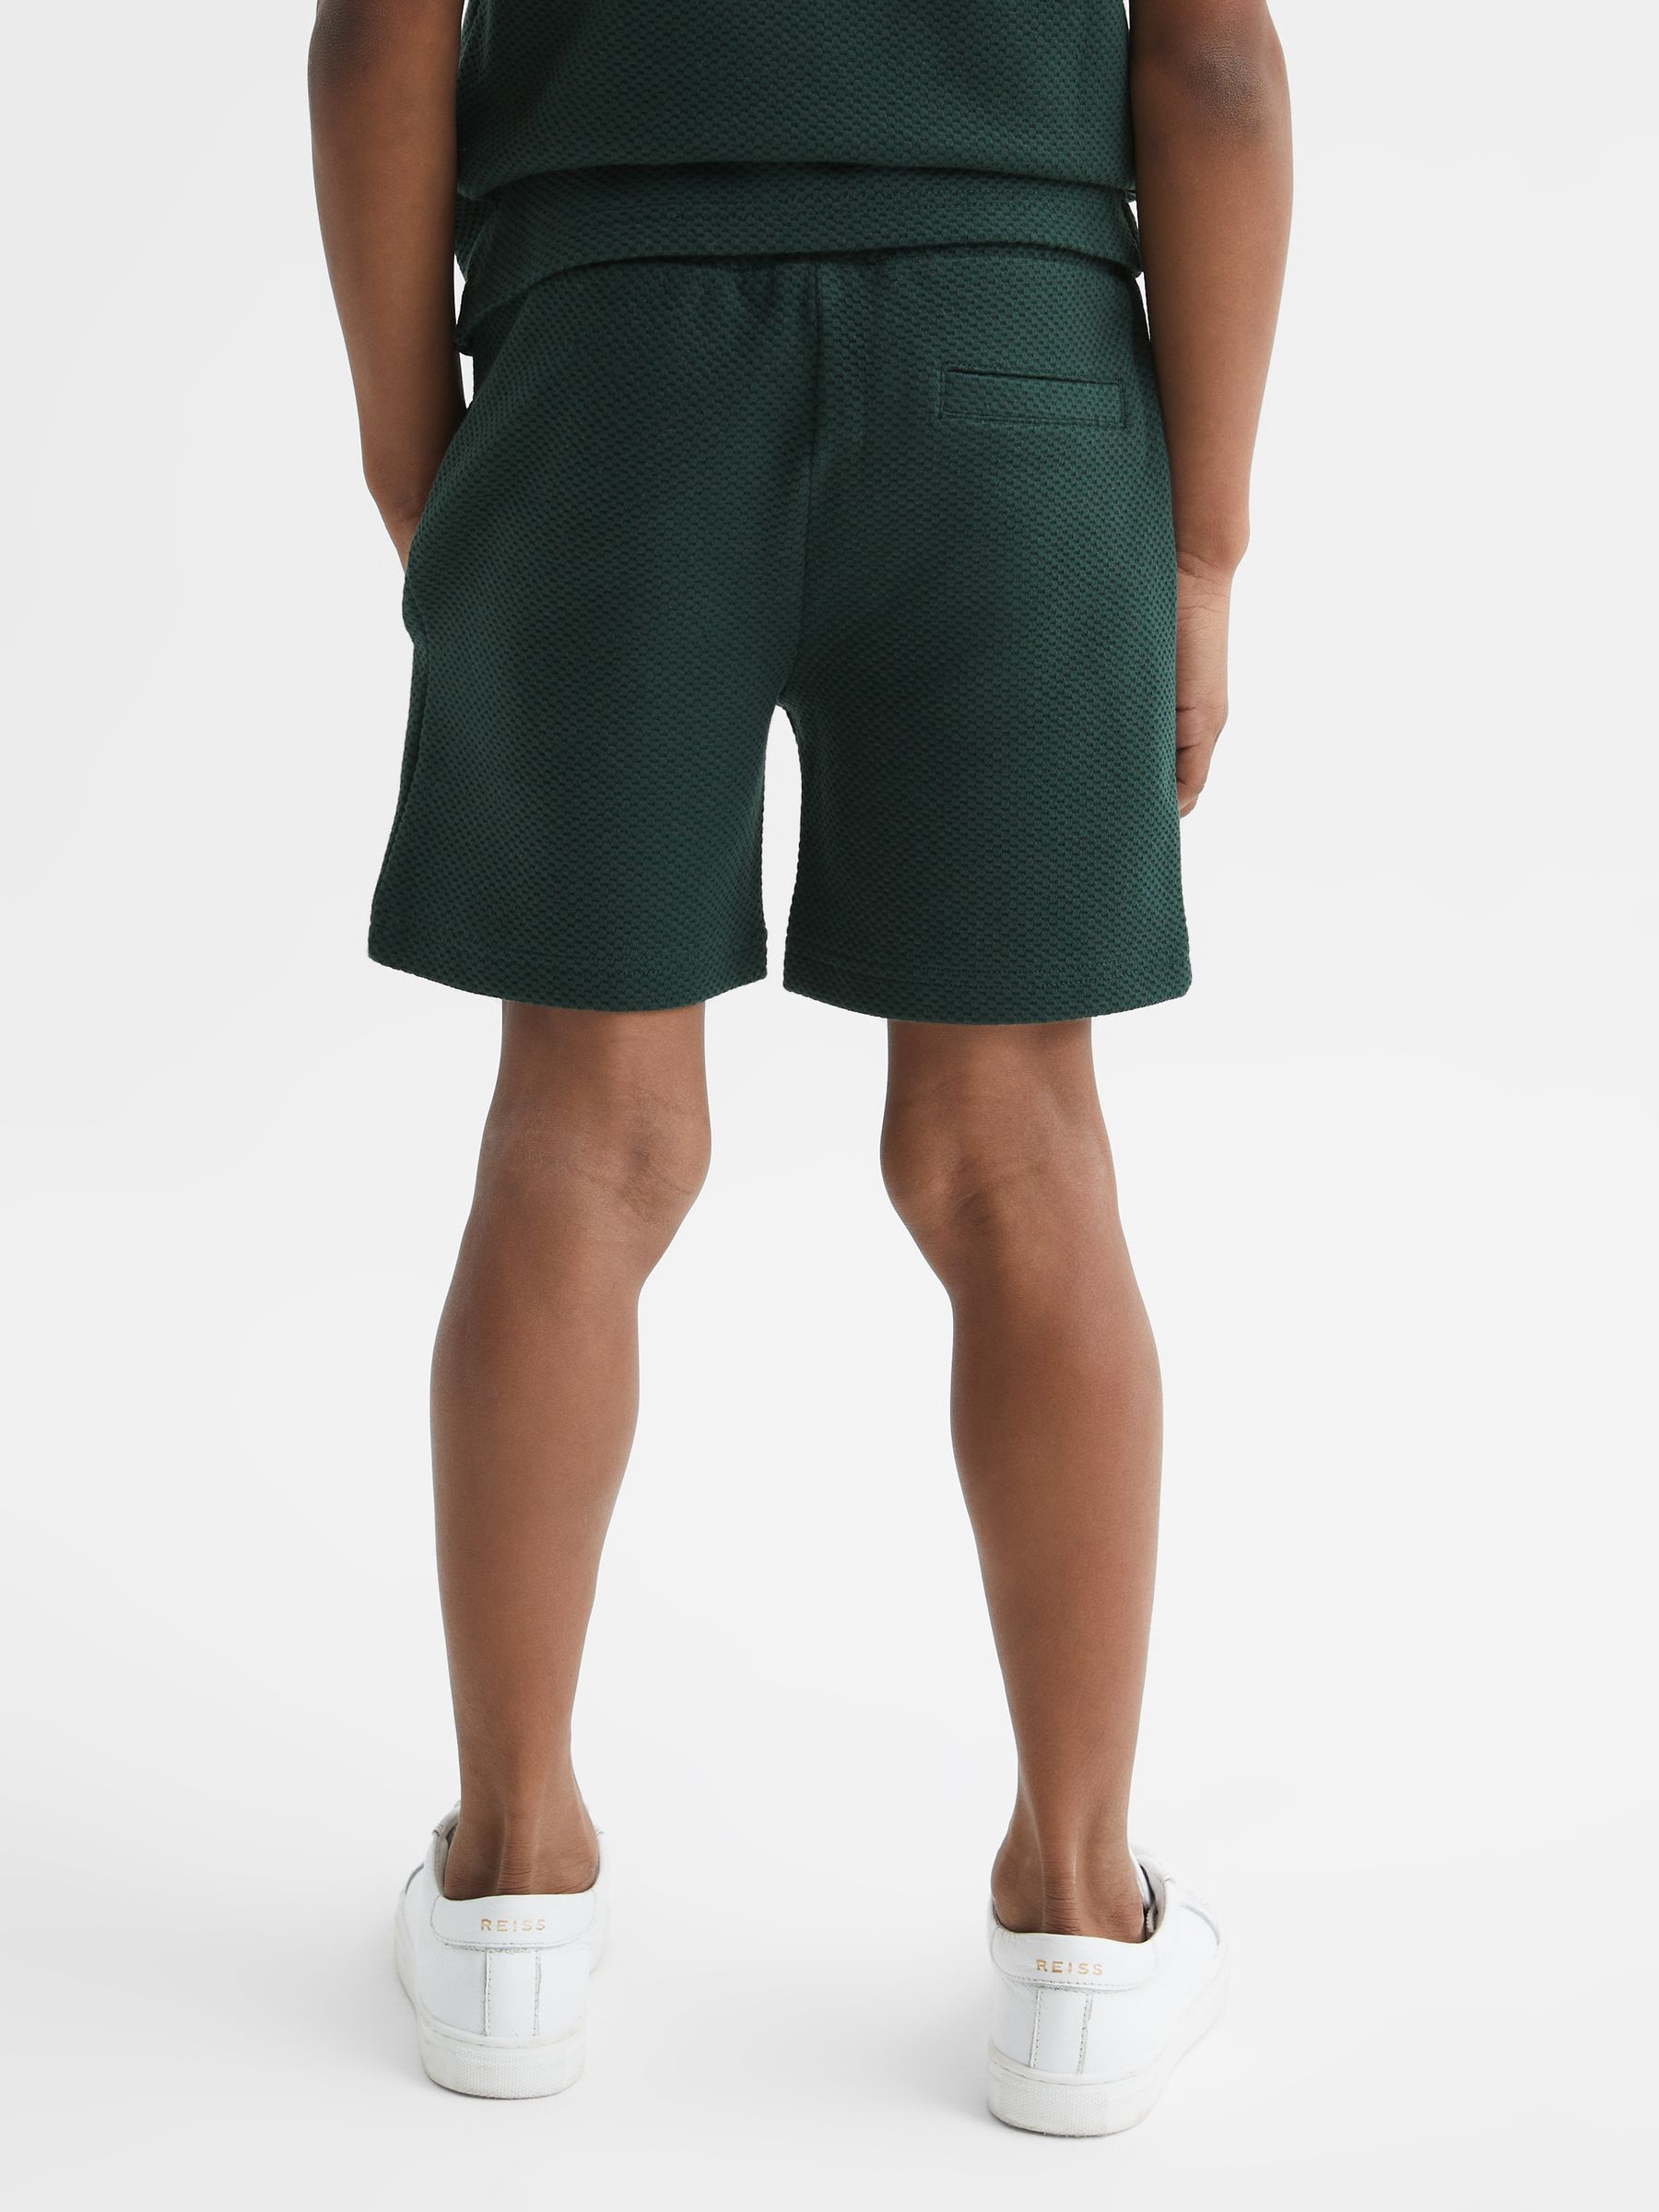 Reiss Robin Slim Fit Textured Drawstring Shorts | REISS USA